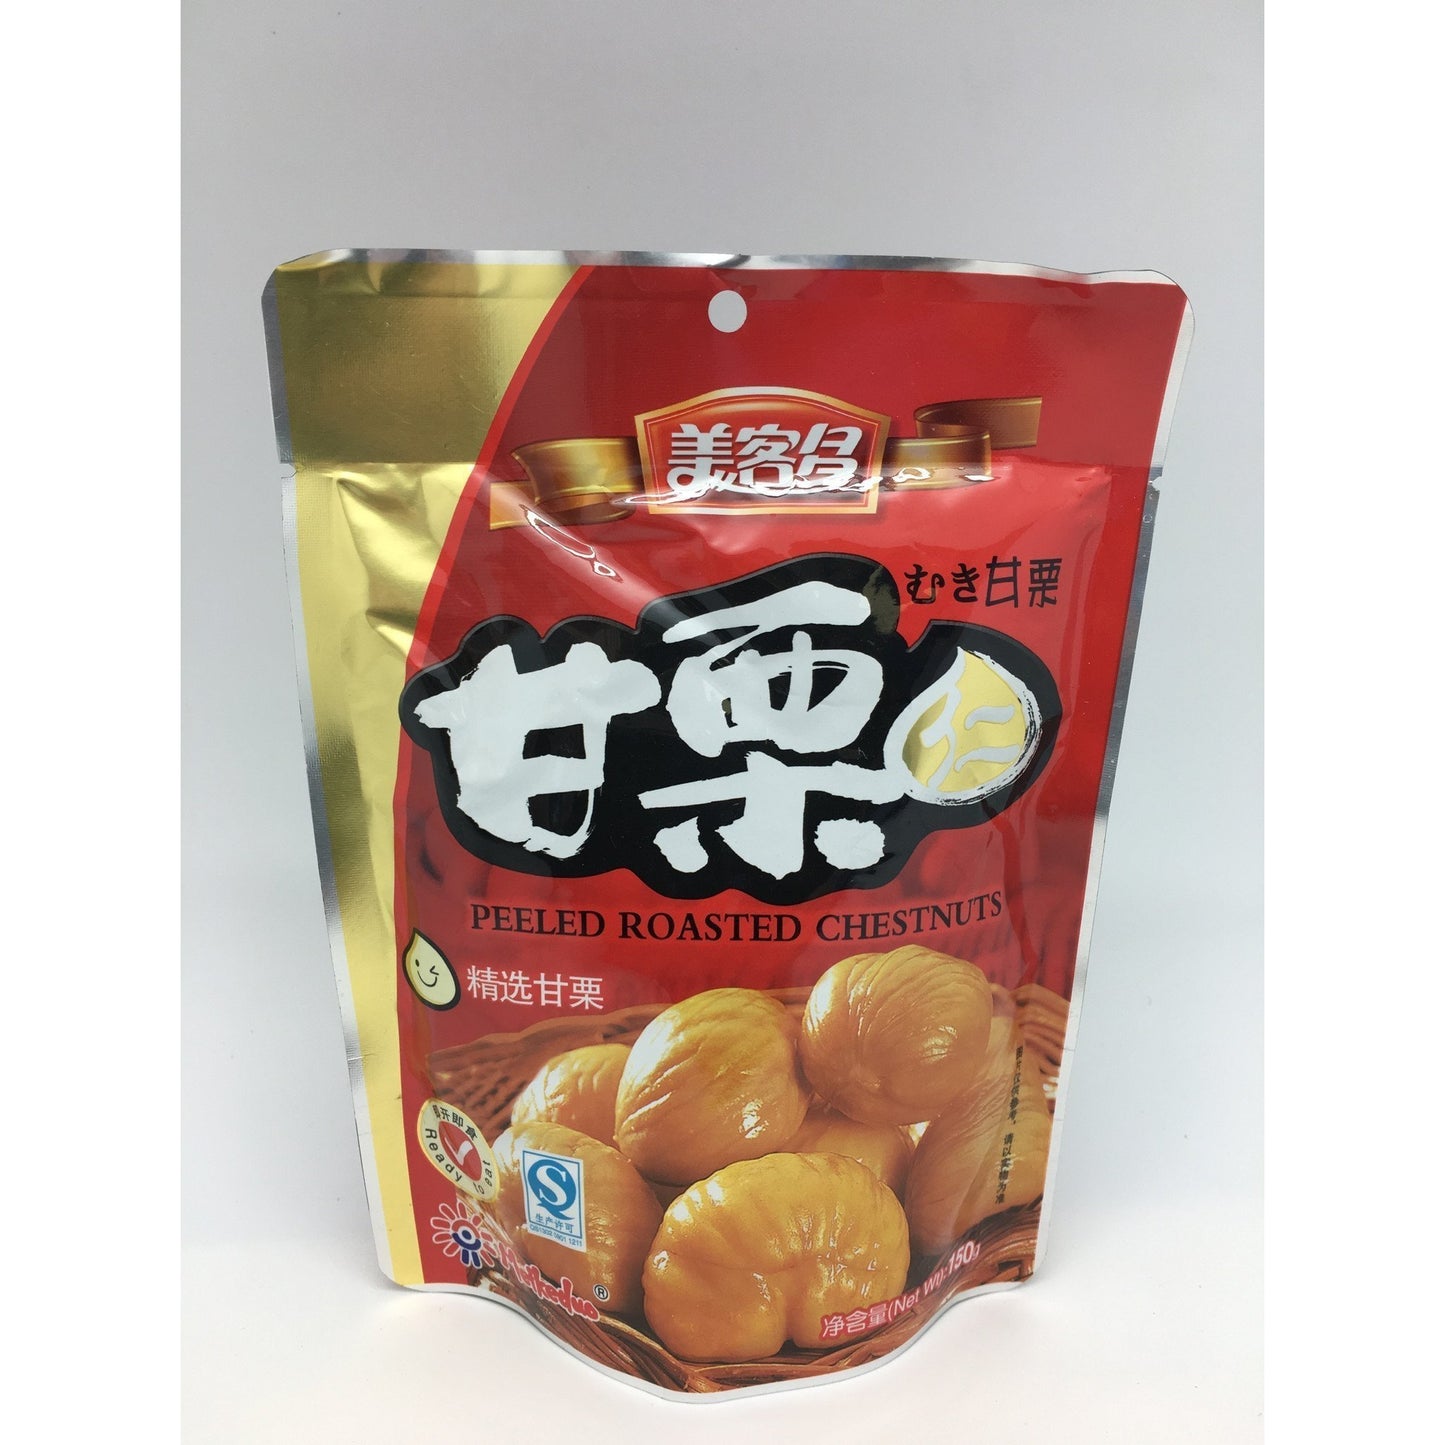 J029M MeiKeDuo Brand - Peeled Roasted Chestnuts 150g - 50 bags / 1 CTN - New Eastland Pty Ltd - Asian food wholesalers